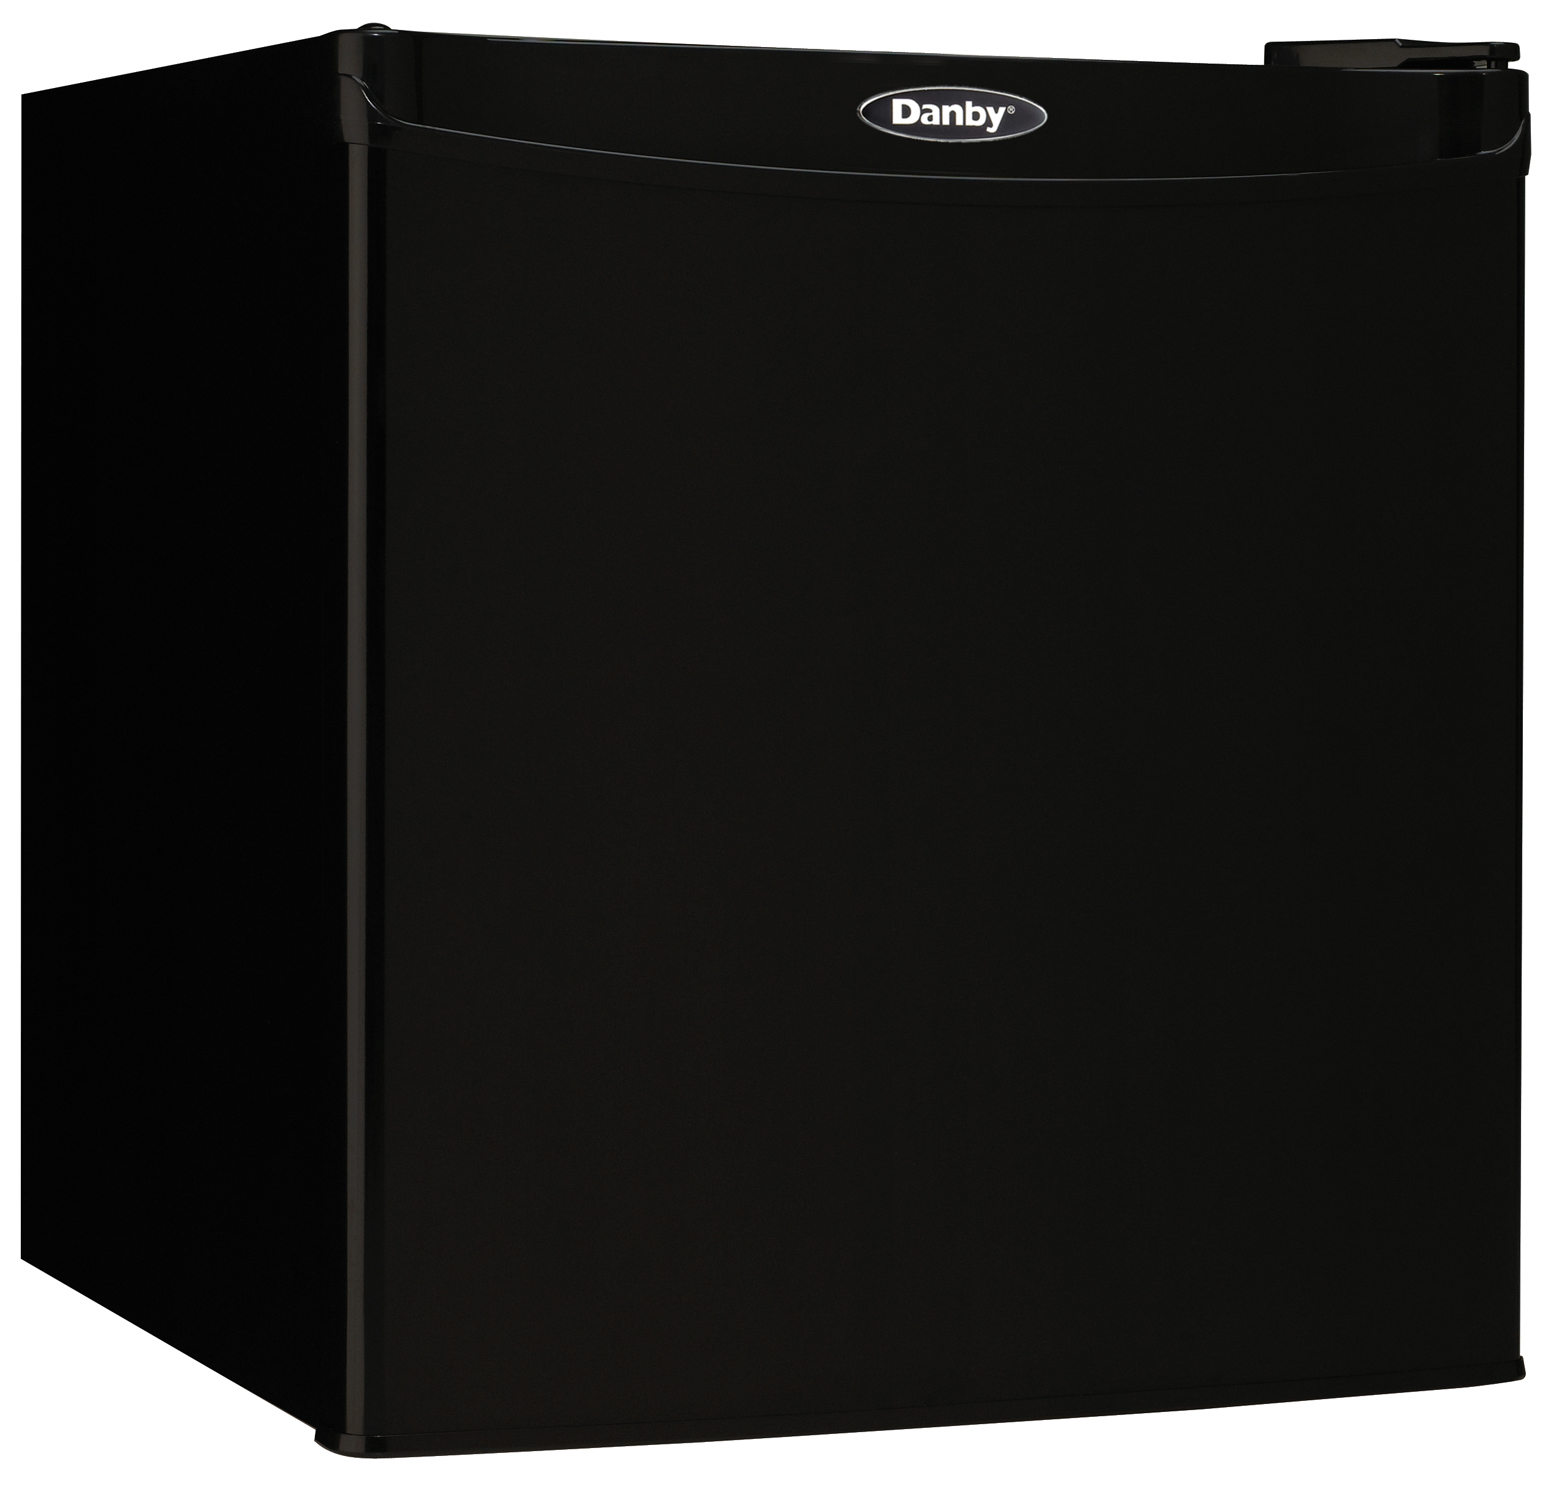 1.6 cu. ft. Danby® Compact Refrigerator